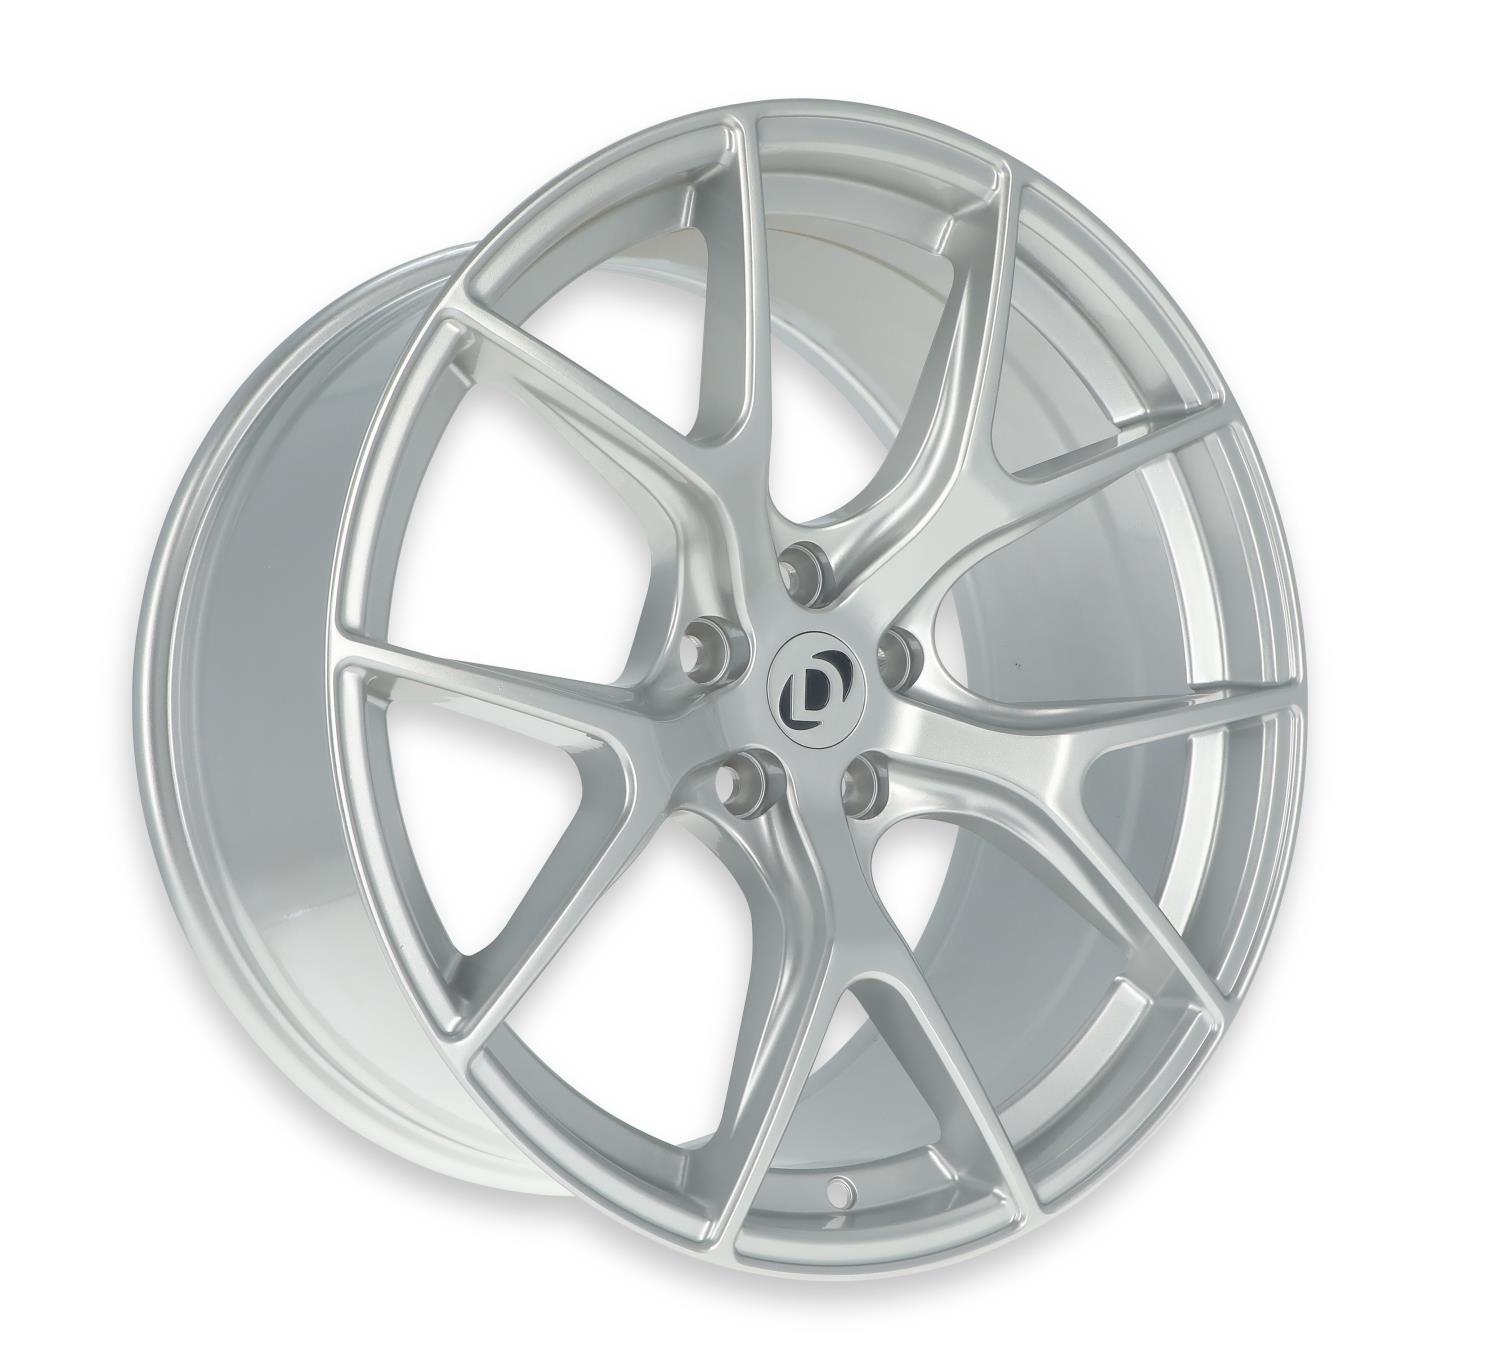 Hyper Kinetic Rear Wheel, Size: 20x8.5", Bolt Pattern: 5x120mm, Backspace: 5.54" [Silver Finish with Clearcoat]